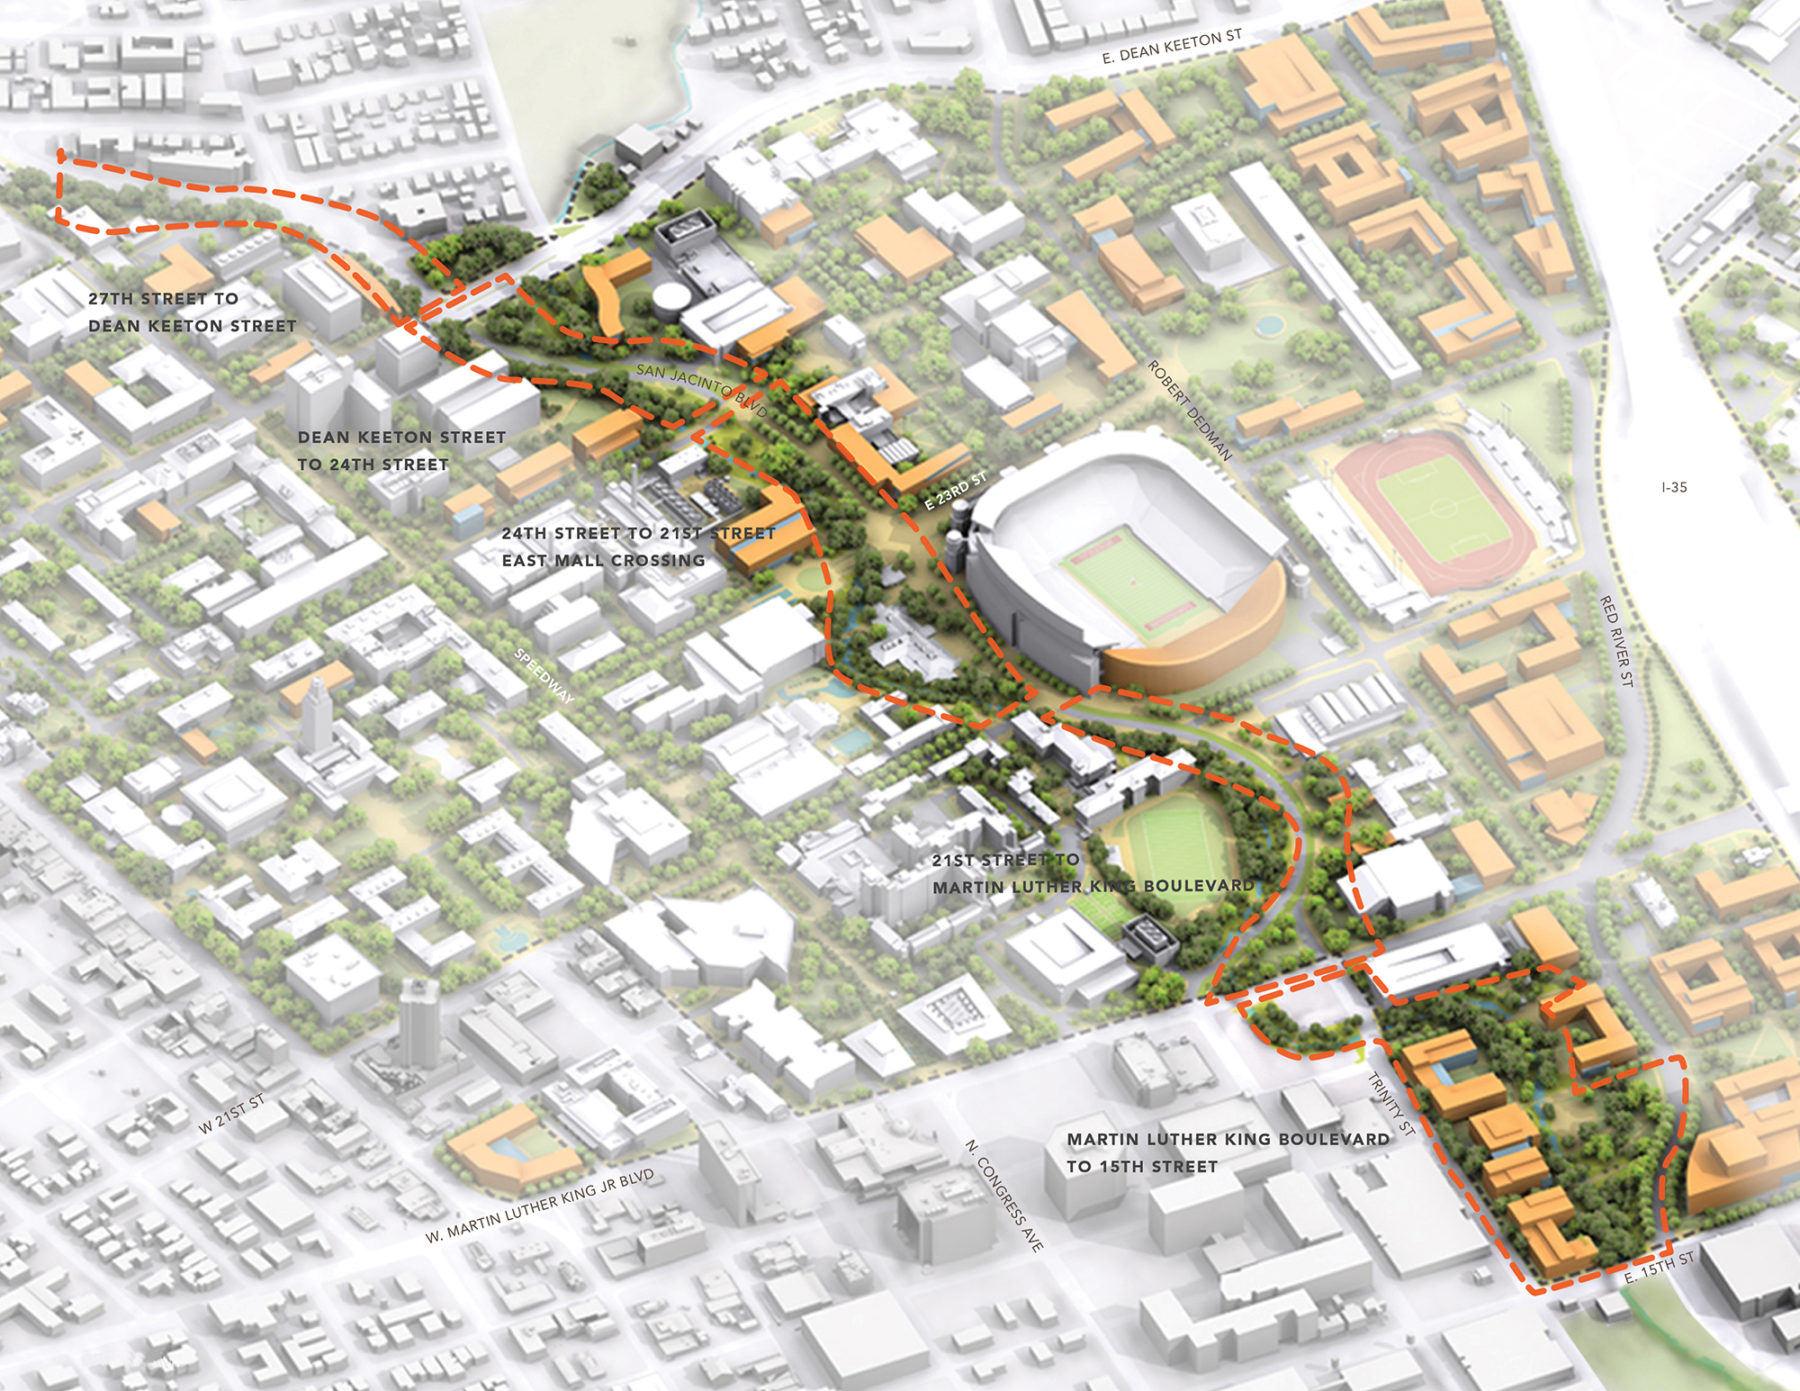 Aerial axon highlighting the street corridor adjacent to the university's stadium